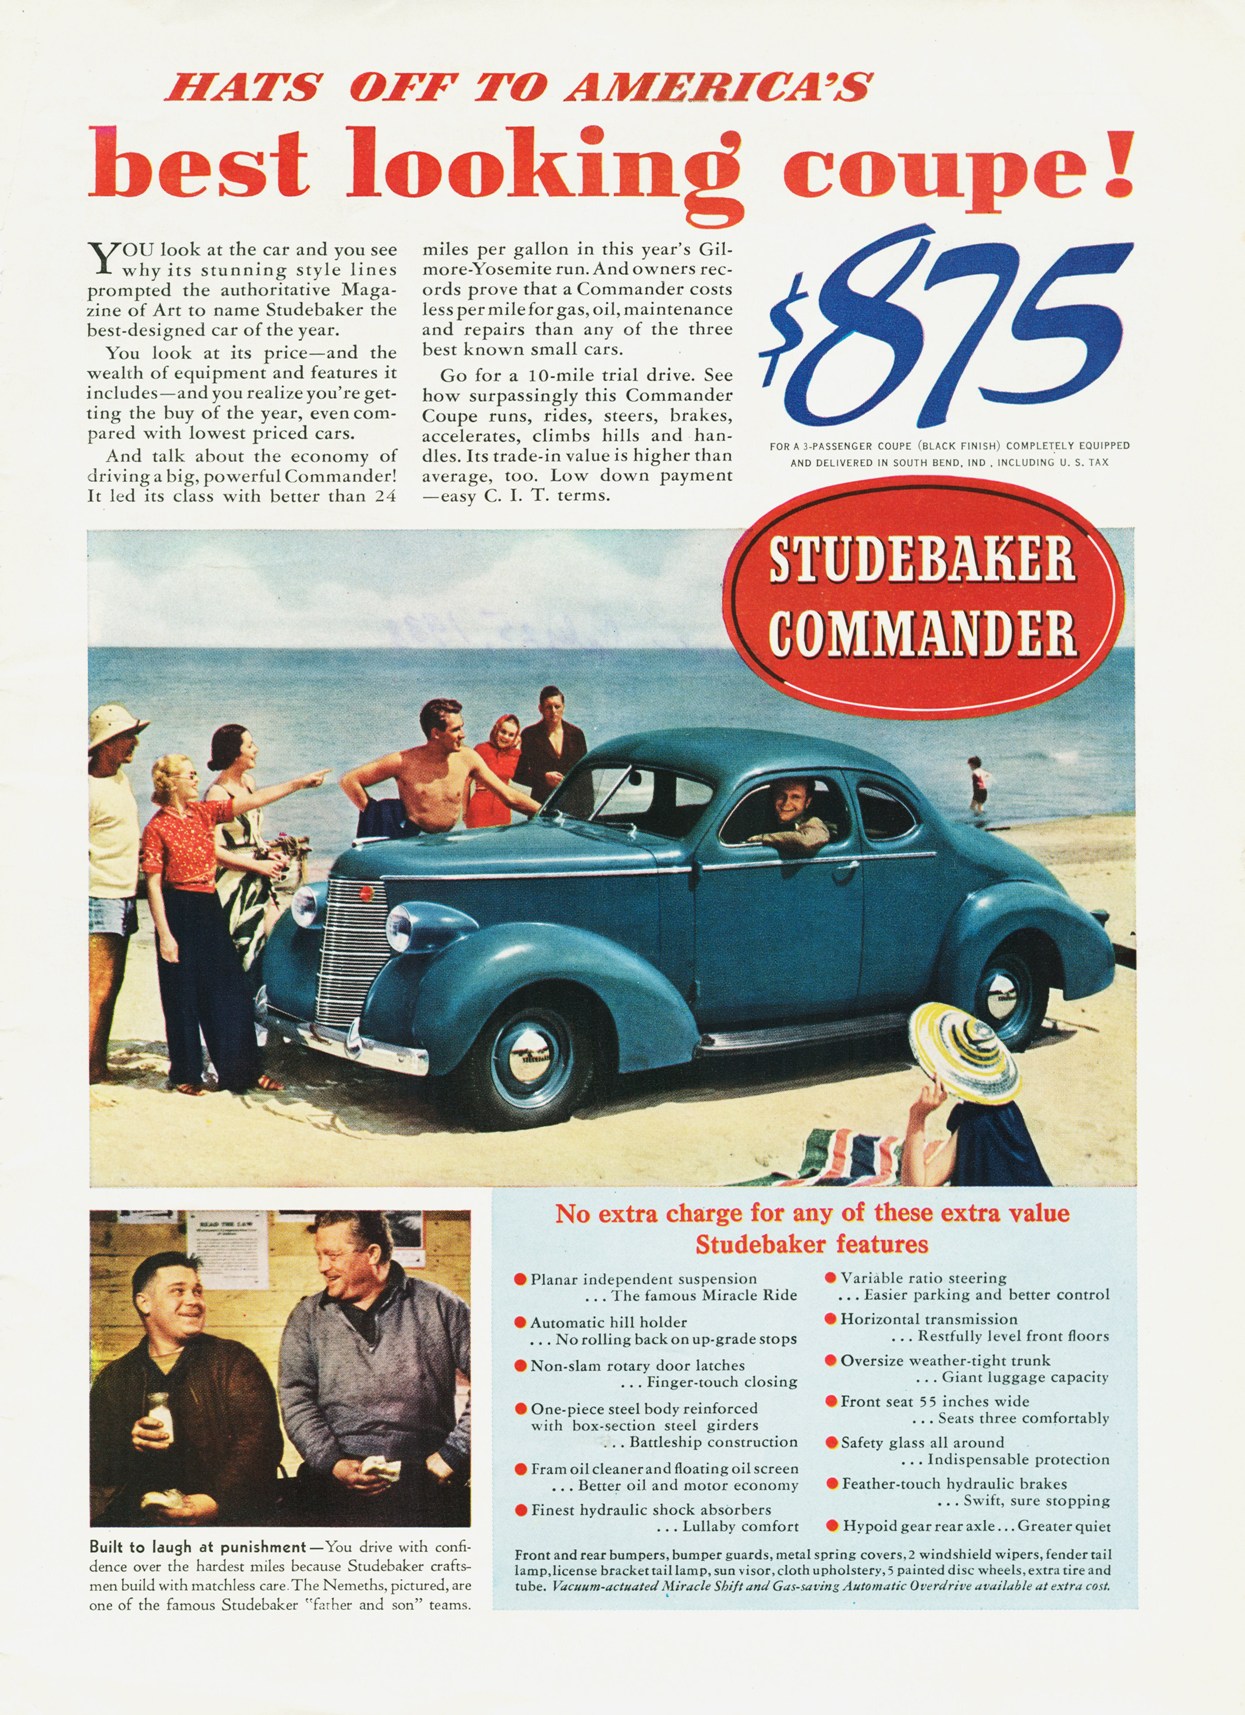 1938 American Auto Advertising